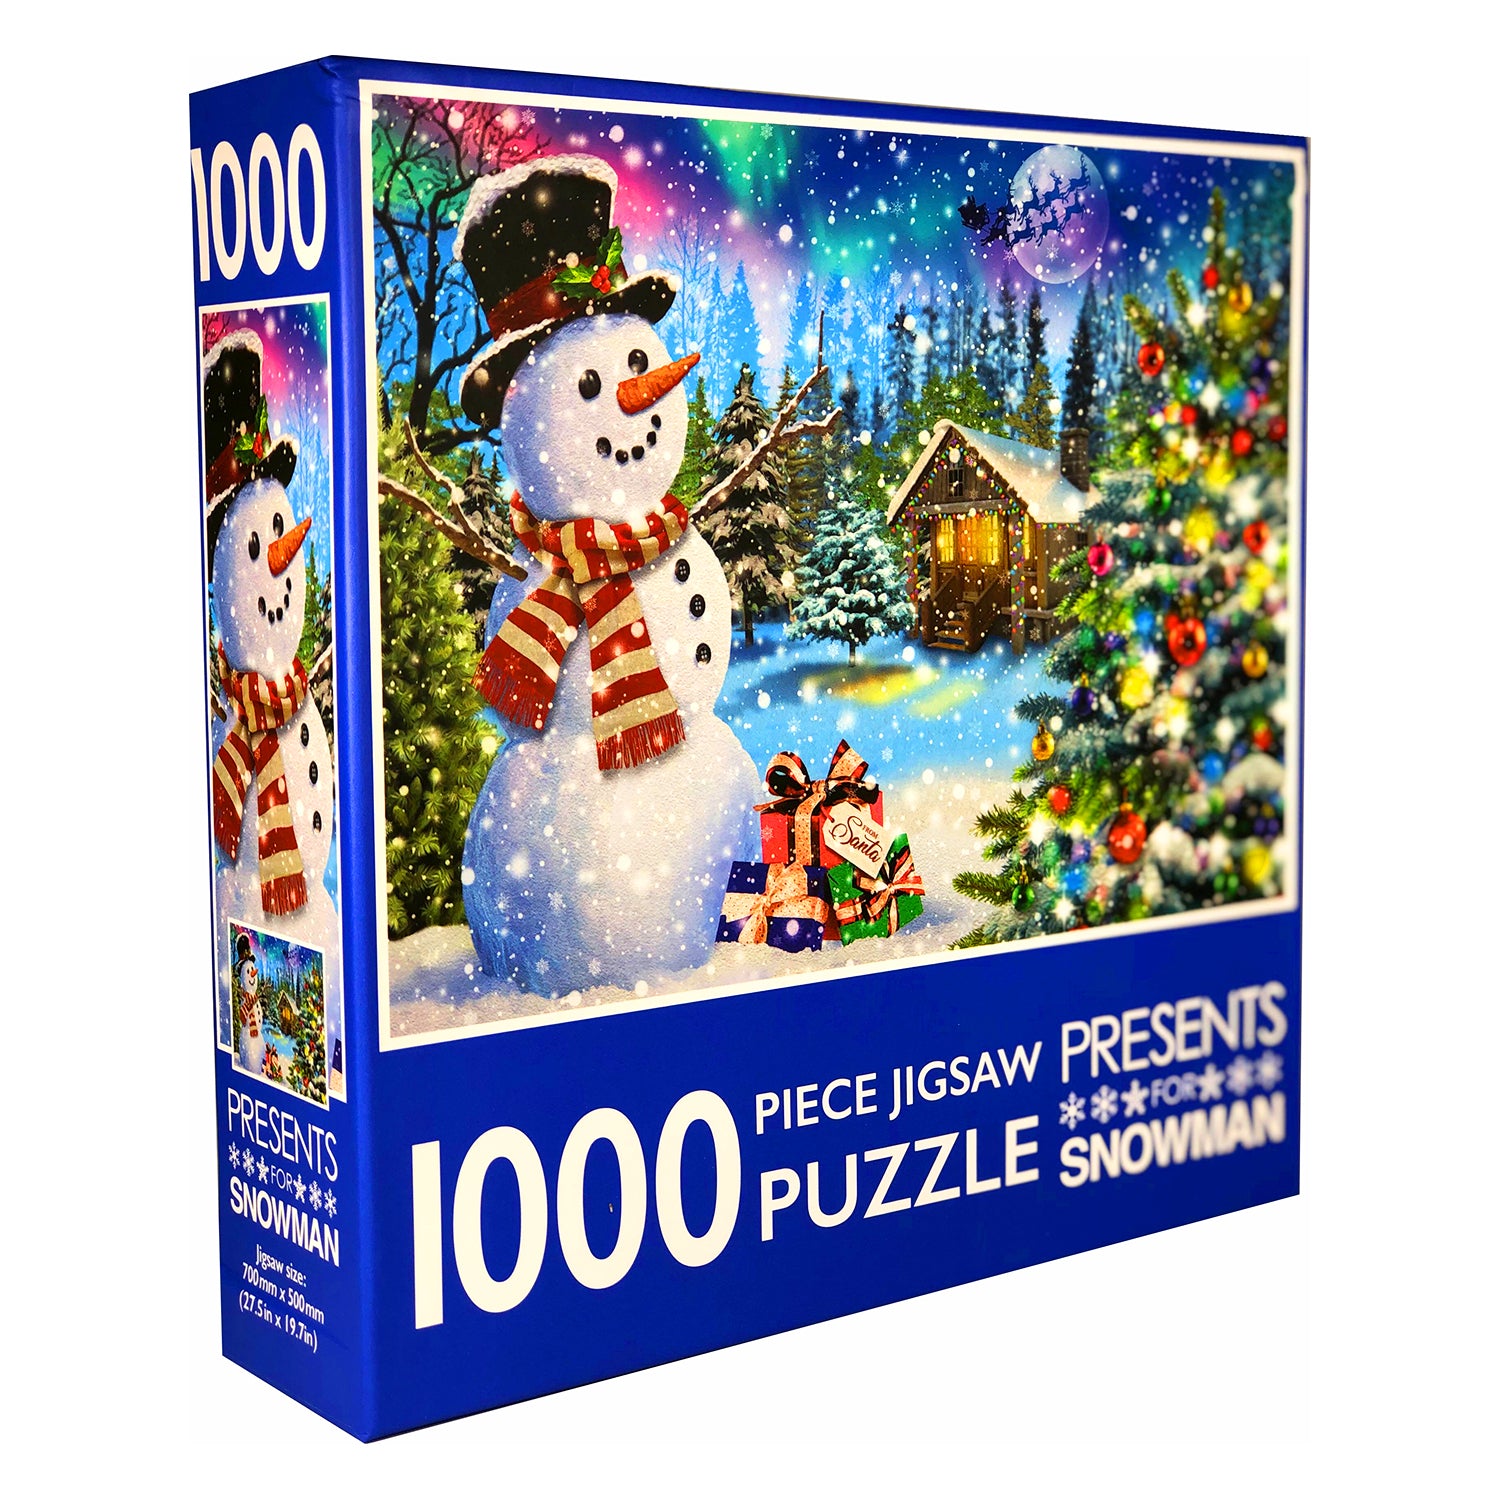 Presents! Presents! Presents! 1000 Piece Jigsaw Puzzle